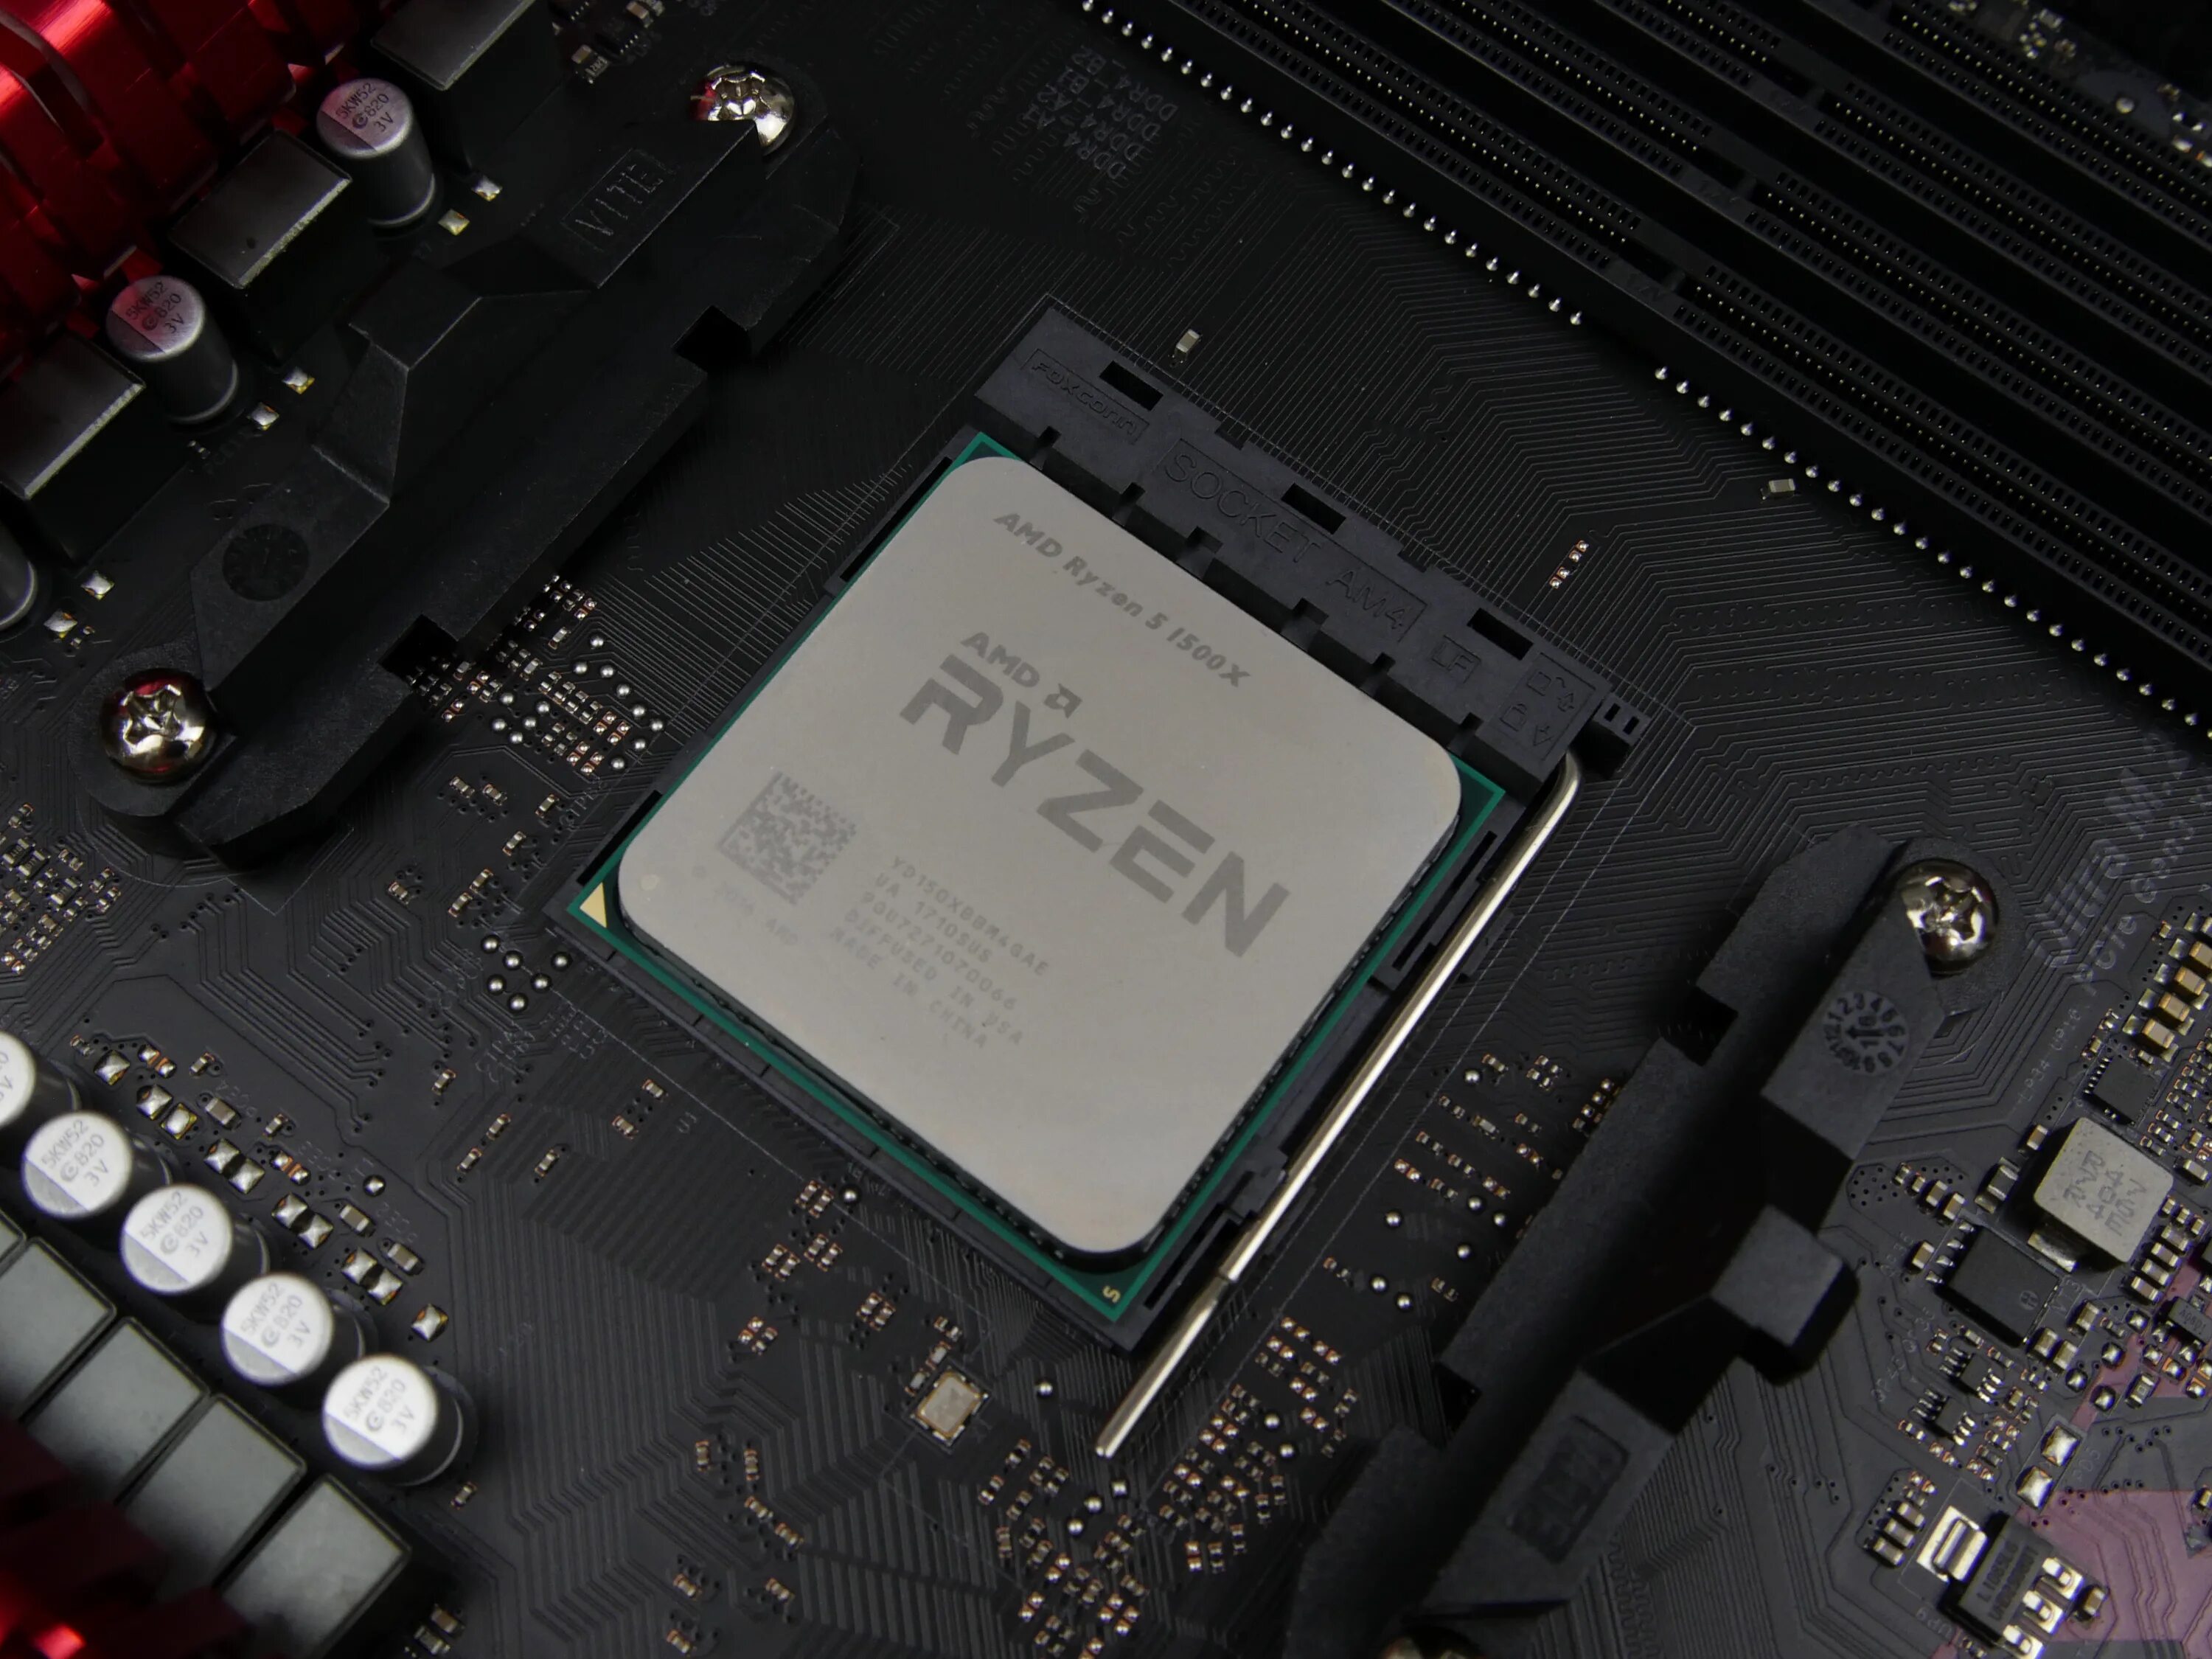 1500х Ryzen. Ryzen 5 1500. AMD Ryzen 5 1500x Quad-Core Processor 3.50 GHZ. Процессор AMD Ryzen 5 1500x (yd150xbbaebox).